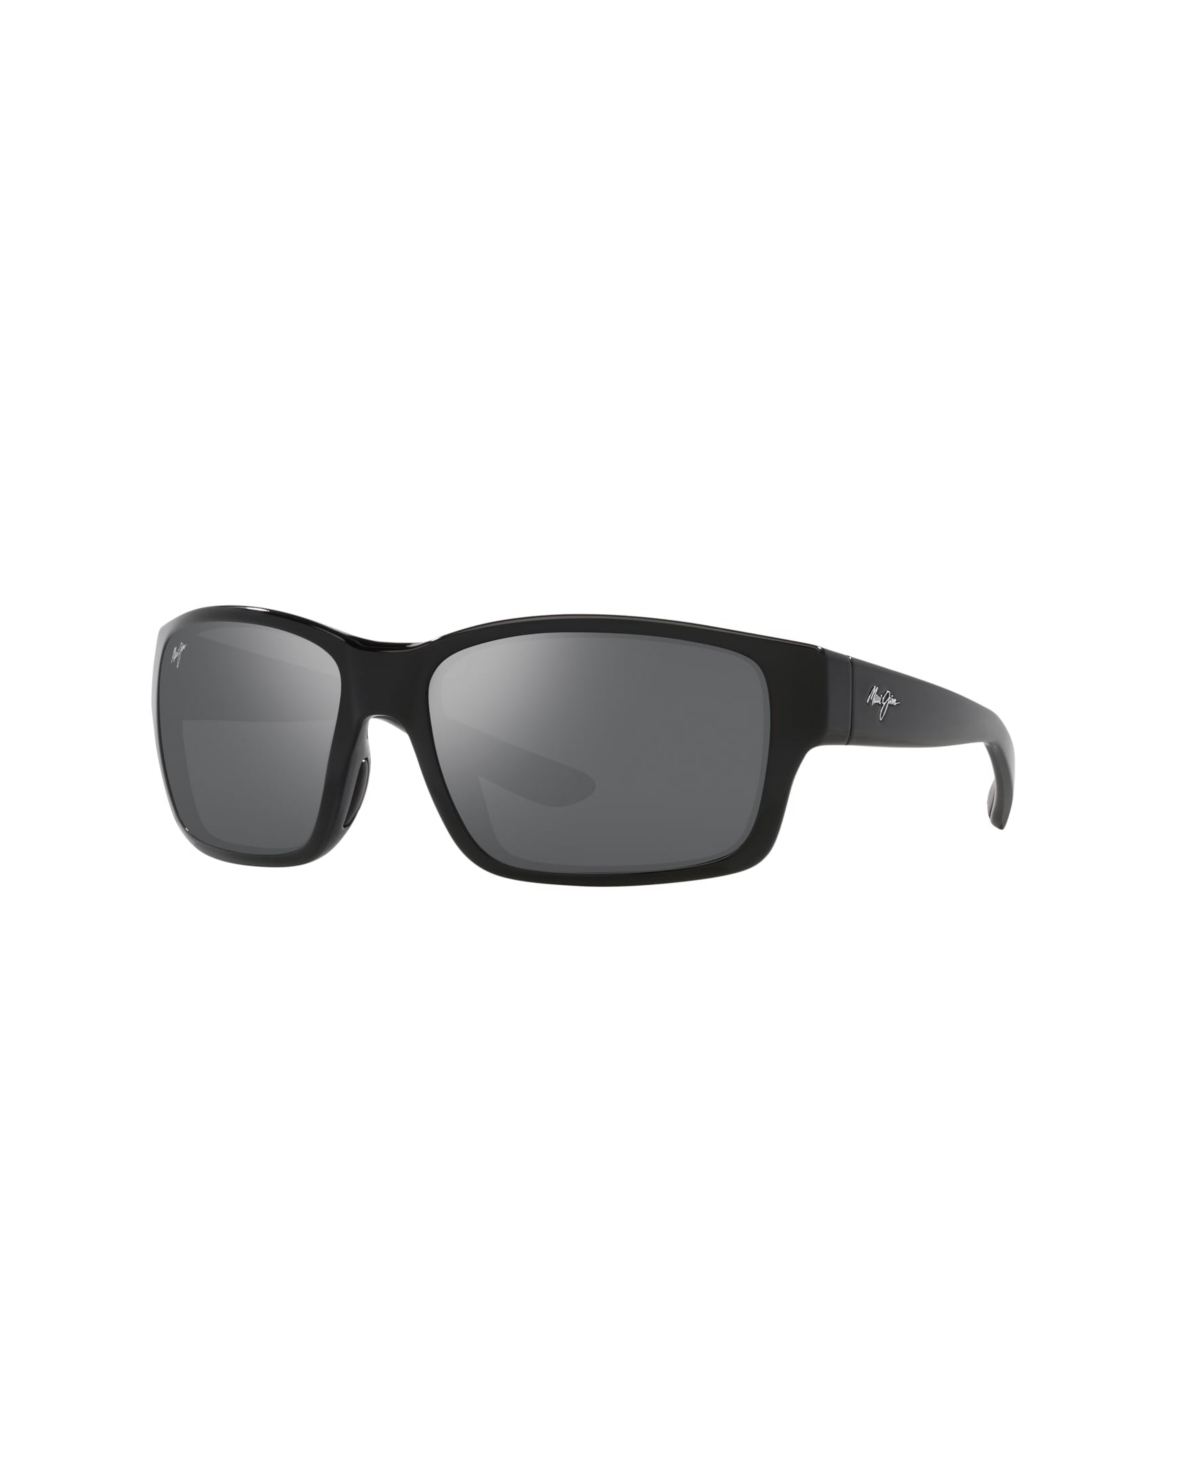 Men's Polarized Sunglasses, Mangroves Mj000732 - Gray Multicolor